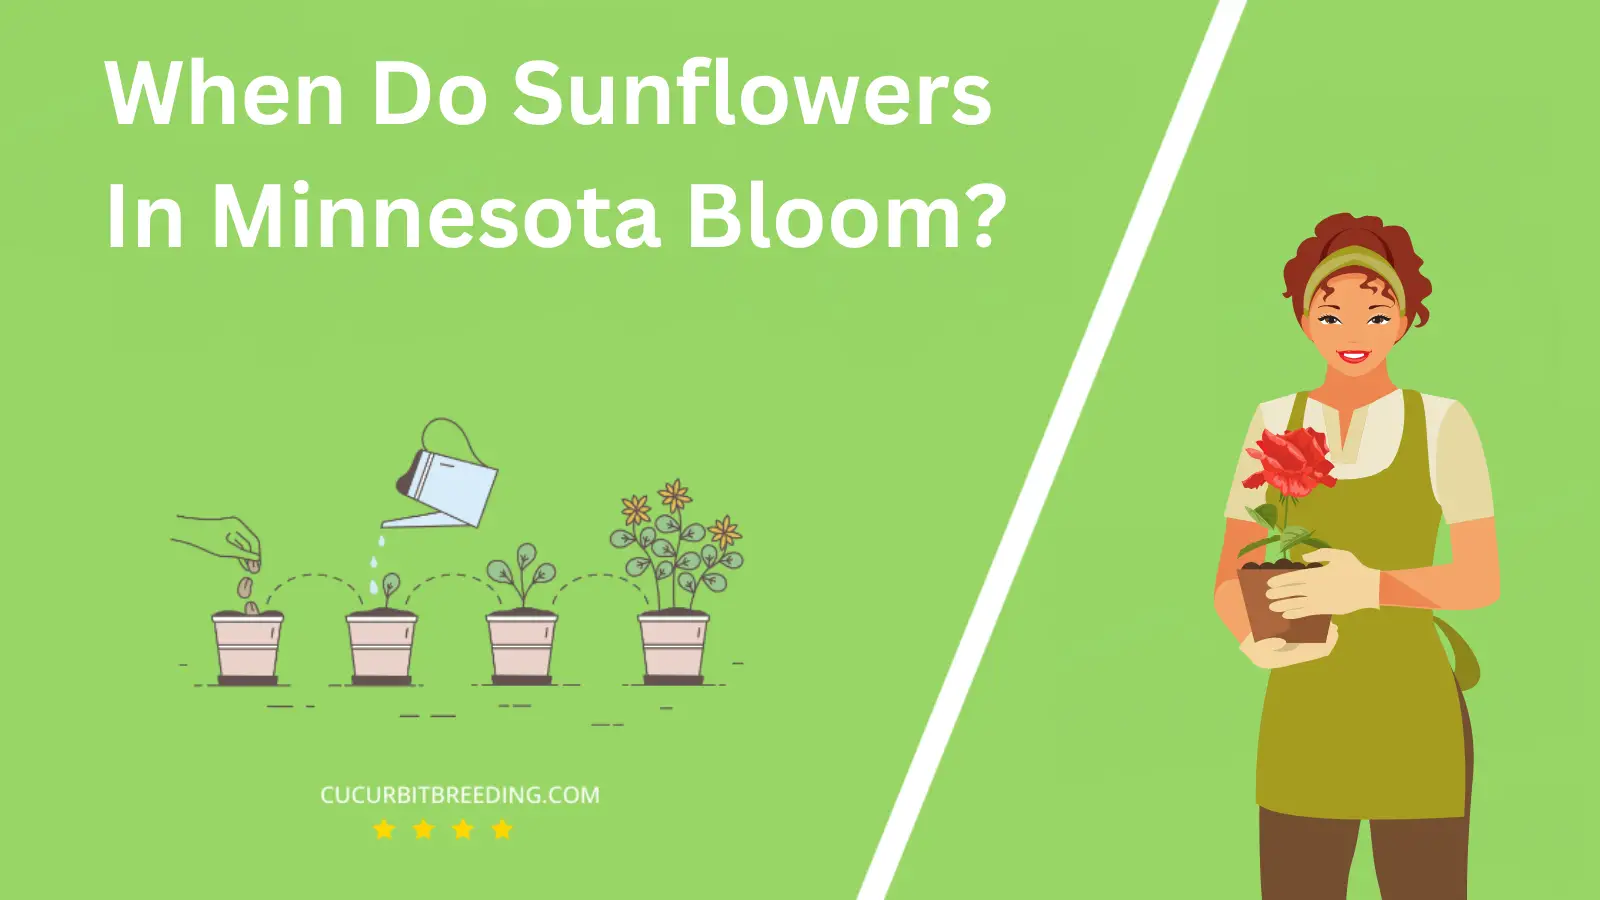 When Do Sunflowers In Minnesota Bloom?